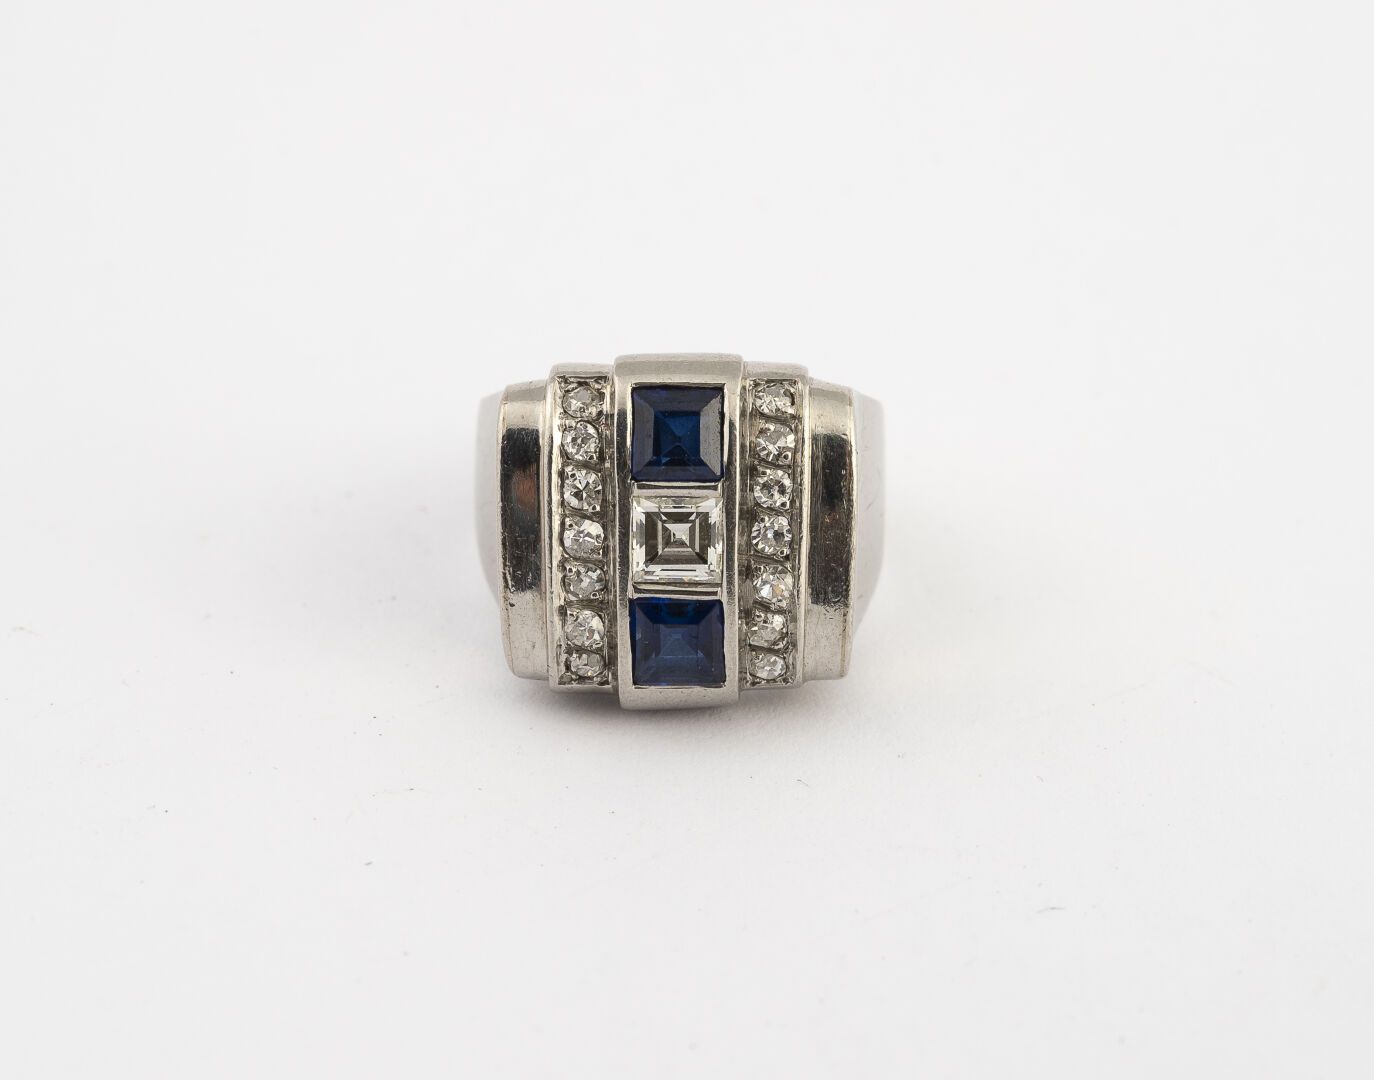 Null 
*SIGNET戒指




铂金方面 




镶嵌着一颗方形钻石和两颗校准的蓝宝石，上面镶嵌着两行钻石




约1935-1940年




毛&hellip;